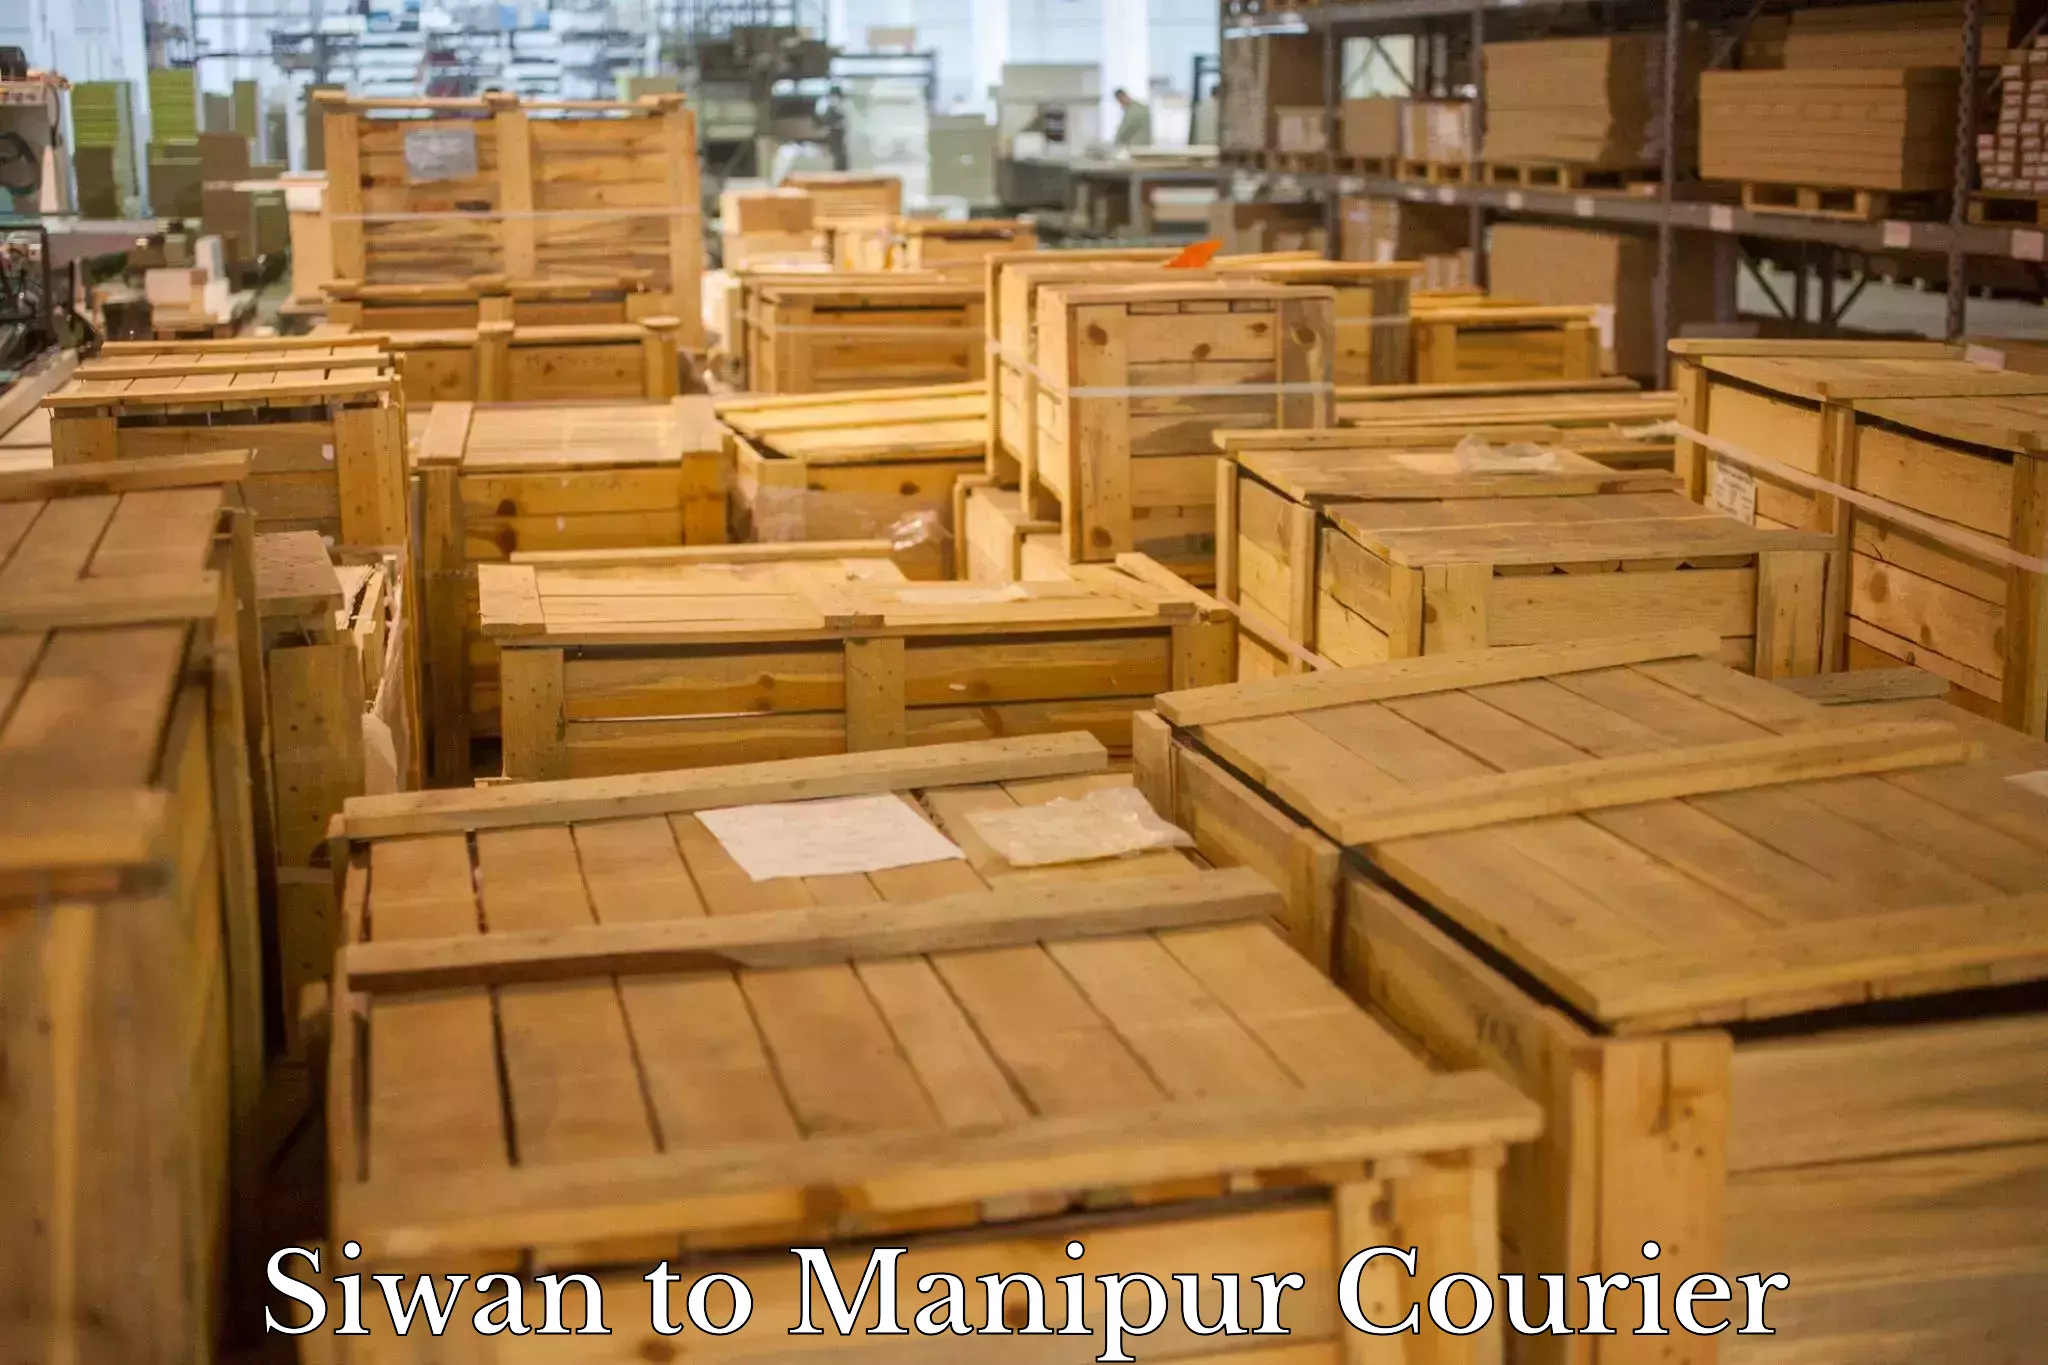 Logistics service provider Siwan to Manipur